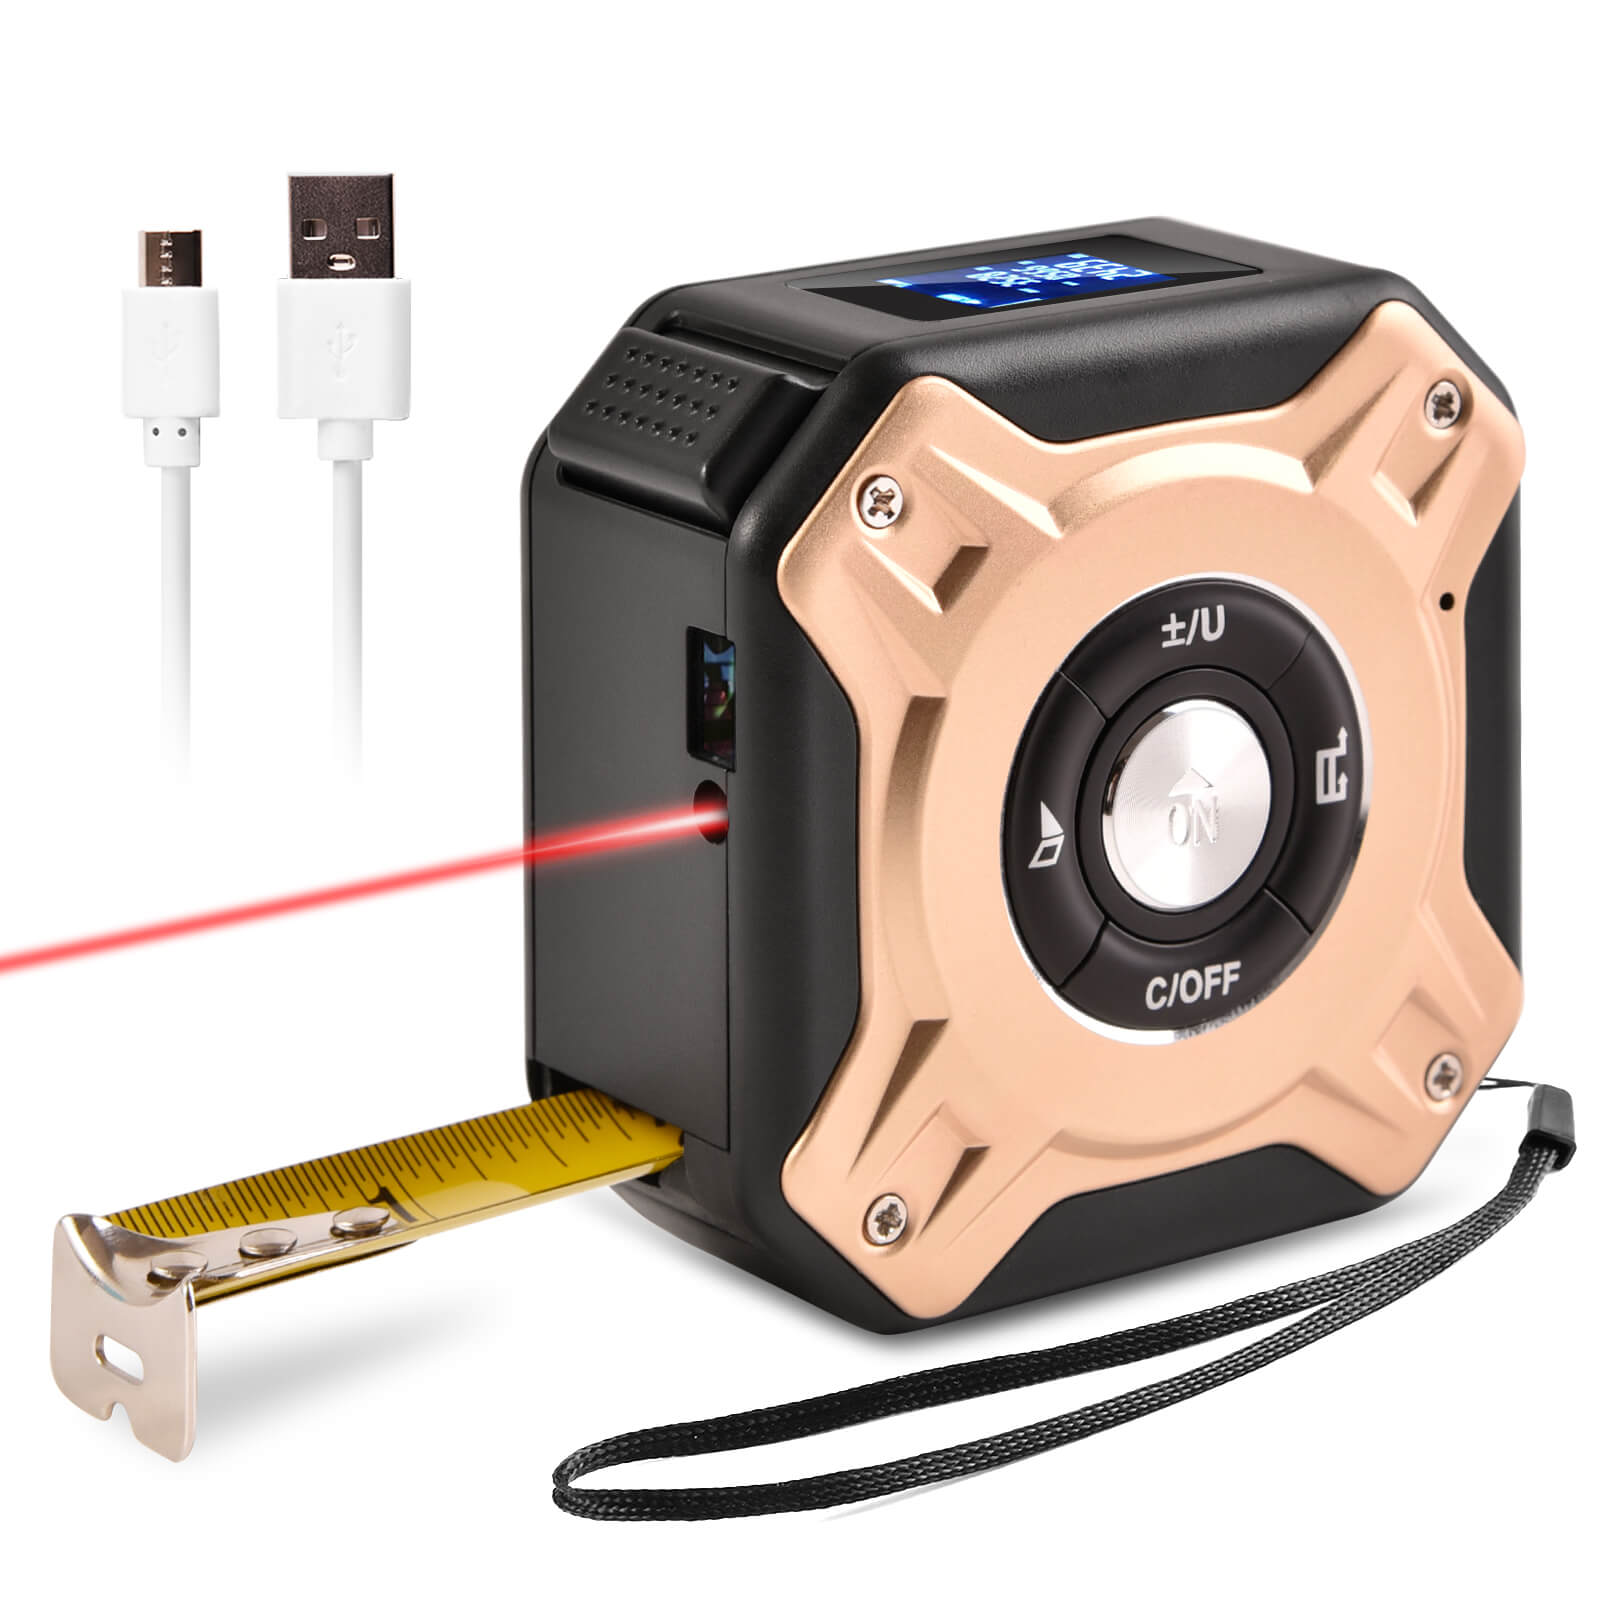 3-in-1 Digital Laser Tape Handheld Electronic Tape Measure Supplier 